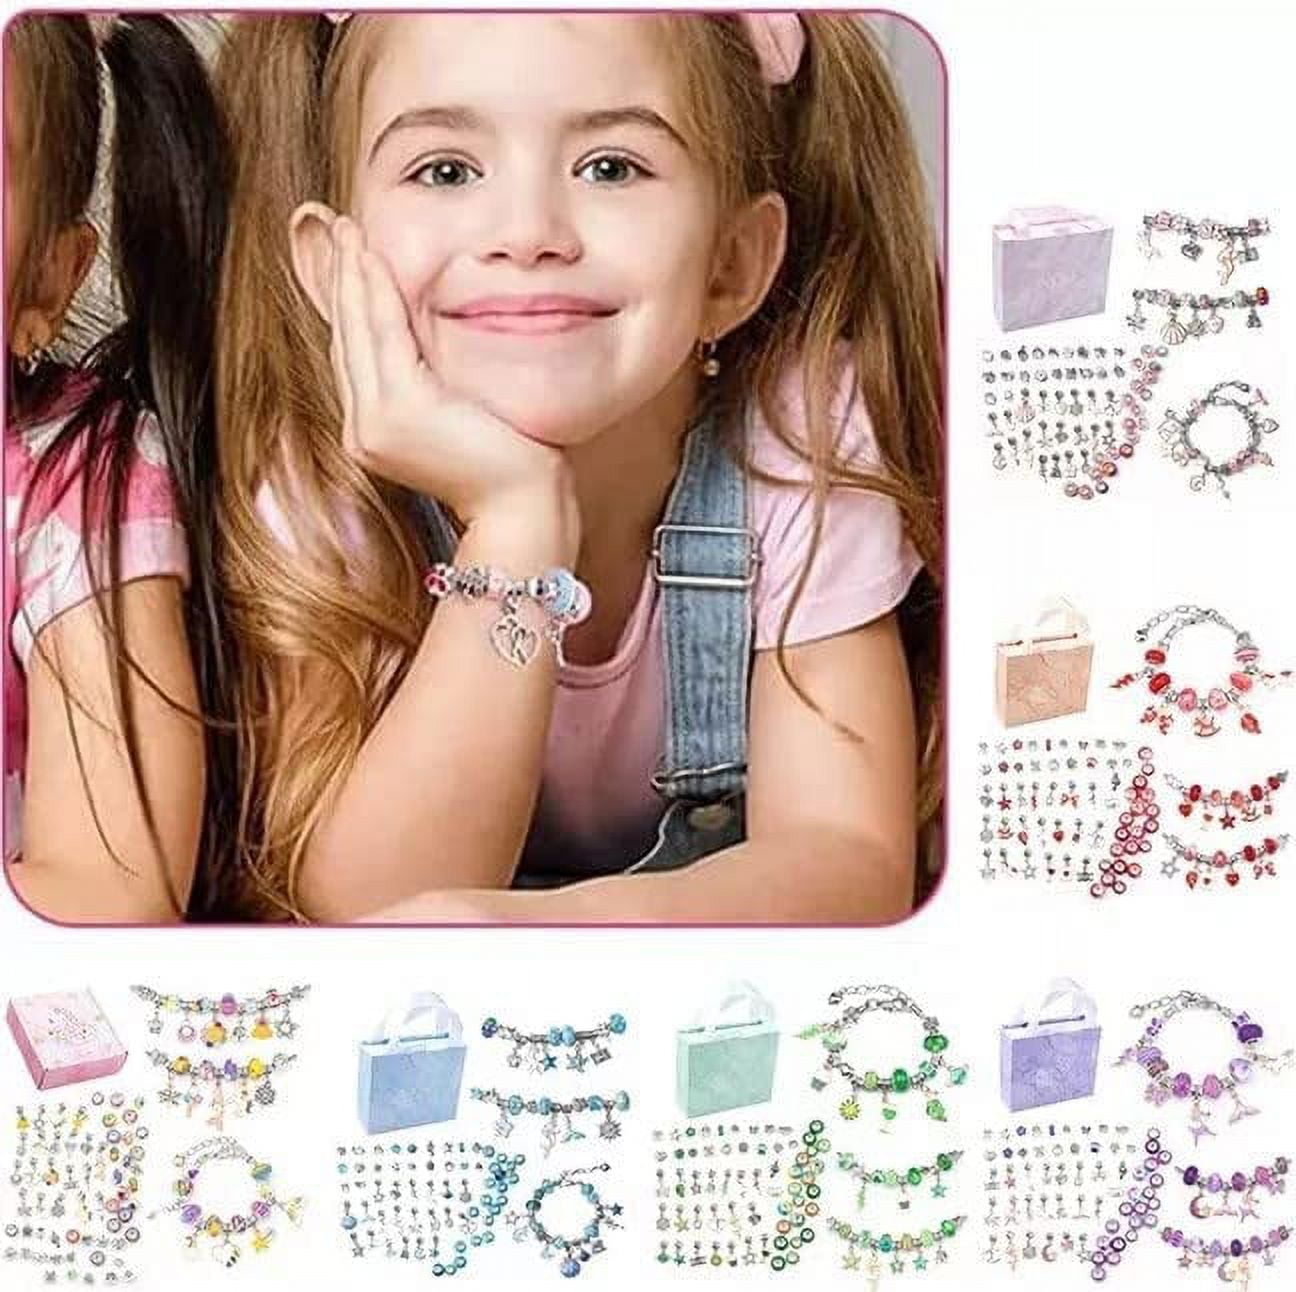 HEQU Crystal Bracelet Set - Bracelet Making Kit Colorful Crystal Beaded  Unicorn/Mermaid Jewelry Bracelet Set